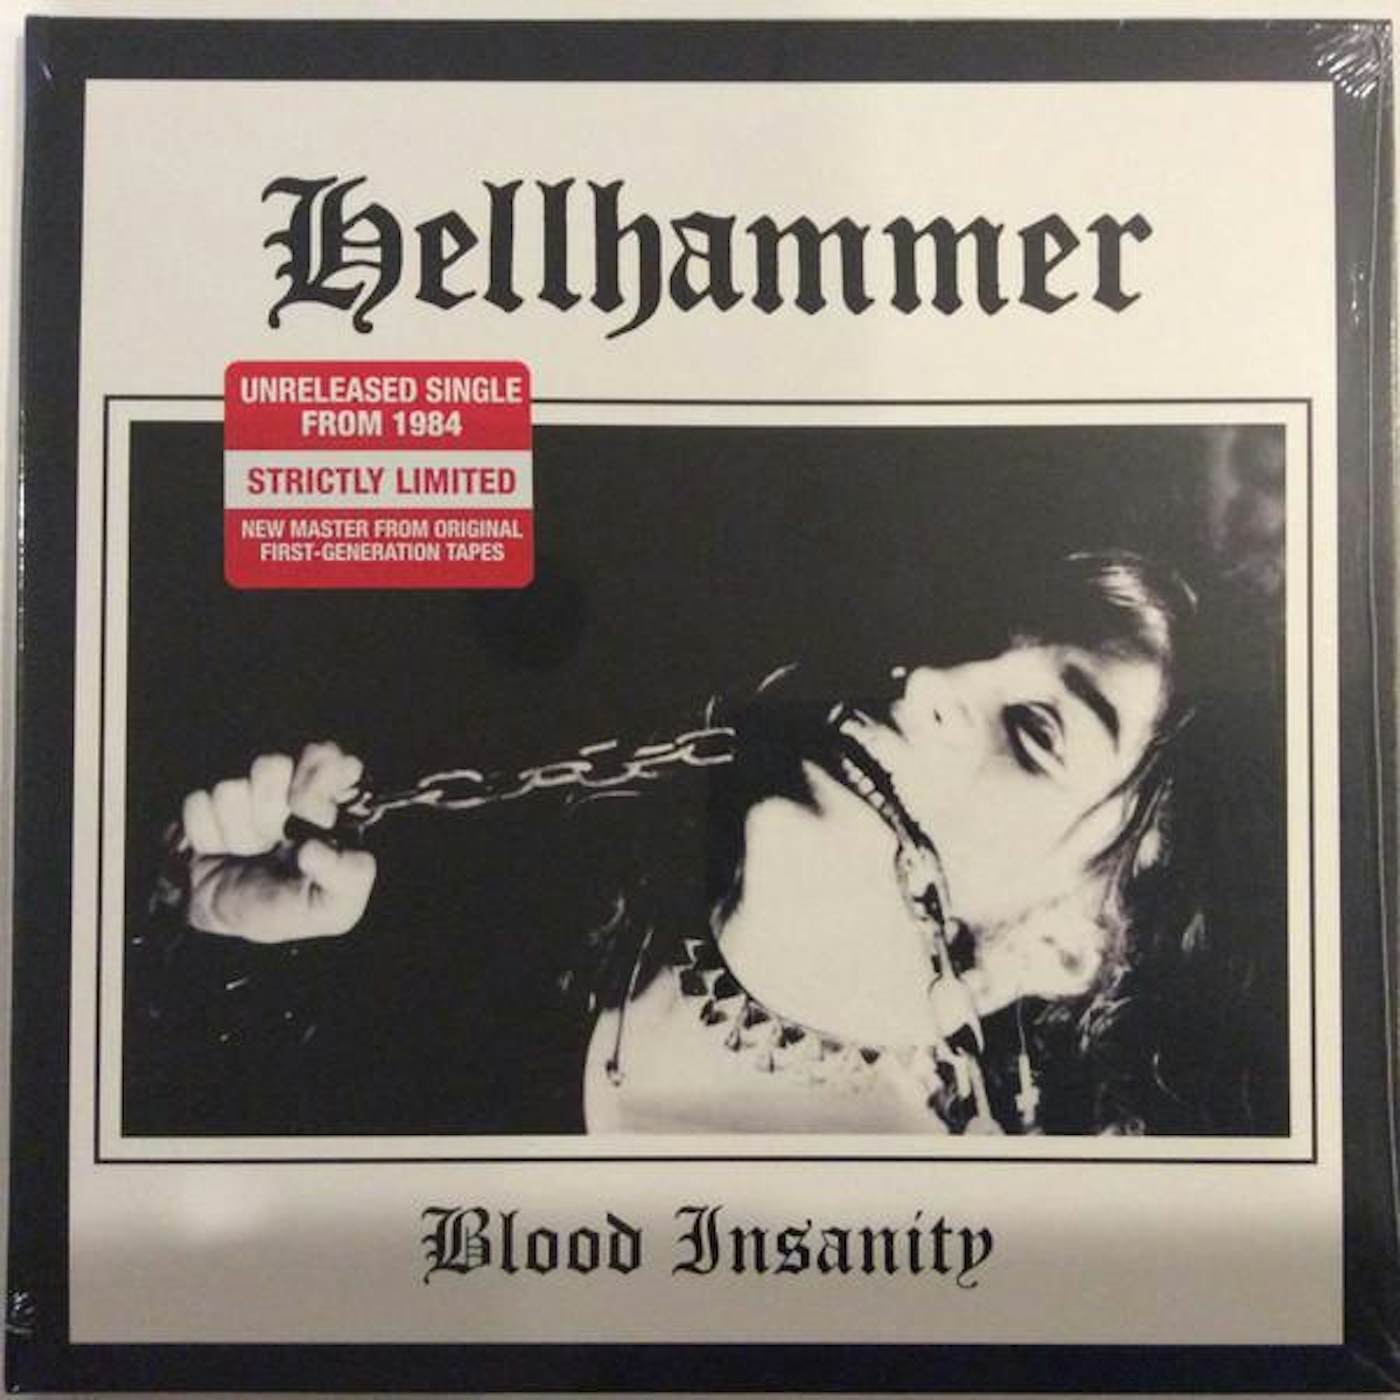 Hellhammer BLOOD INSANITY   (SLV) (GER) Vinyl Record - Colored Vinyl, Gatefold Sleeve